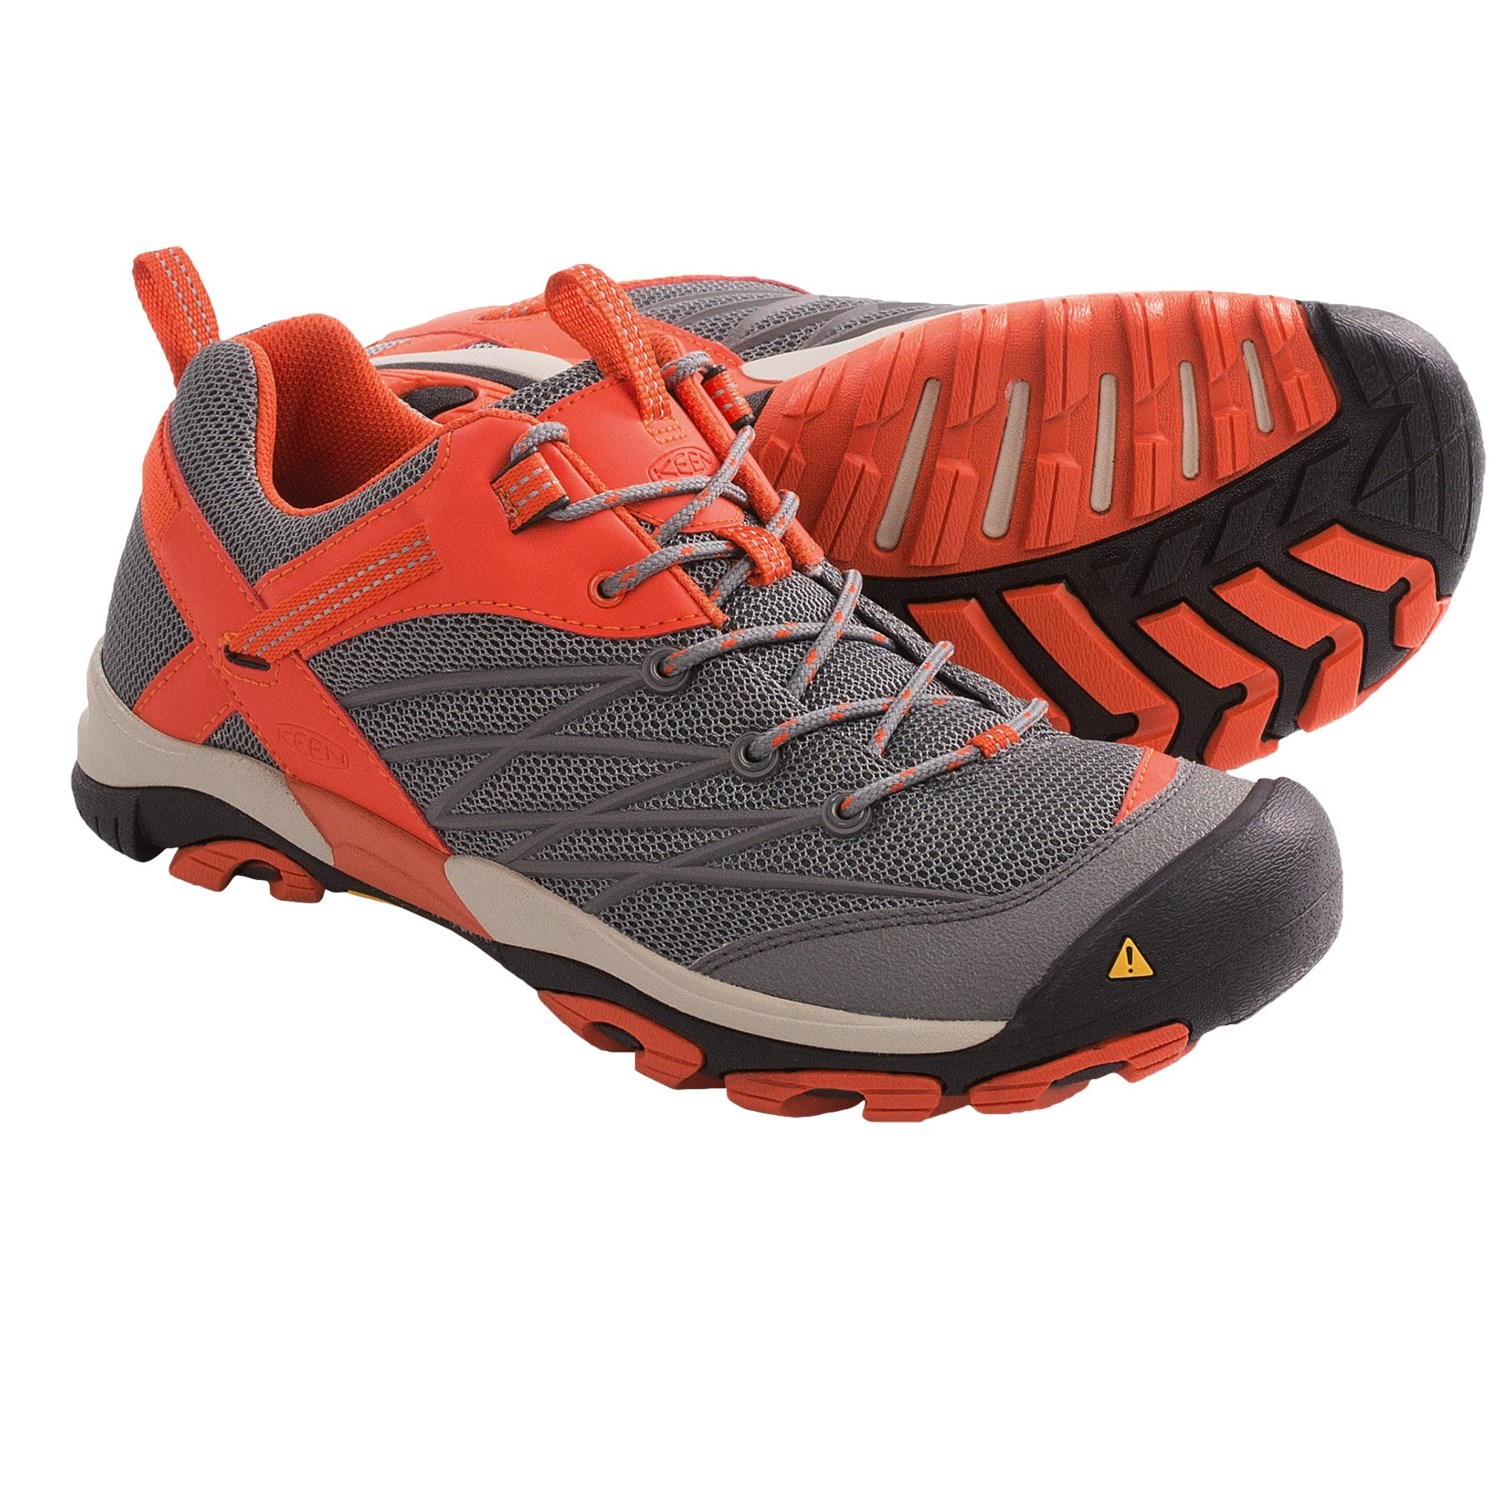 Keen Marshall Hiking Shoes (For Men) in GargoyleSpicy Orange